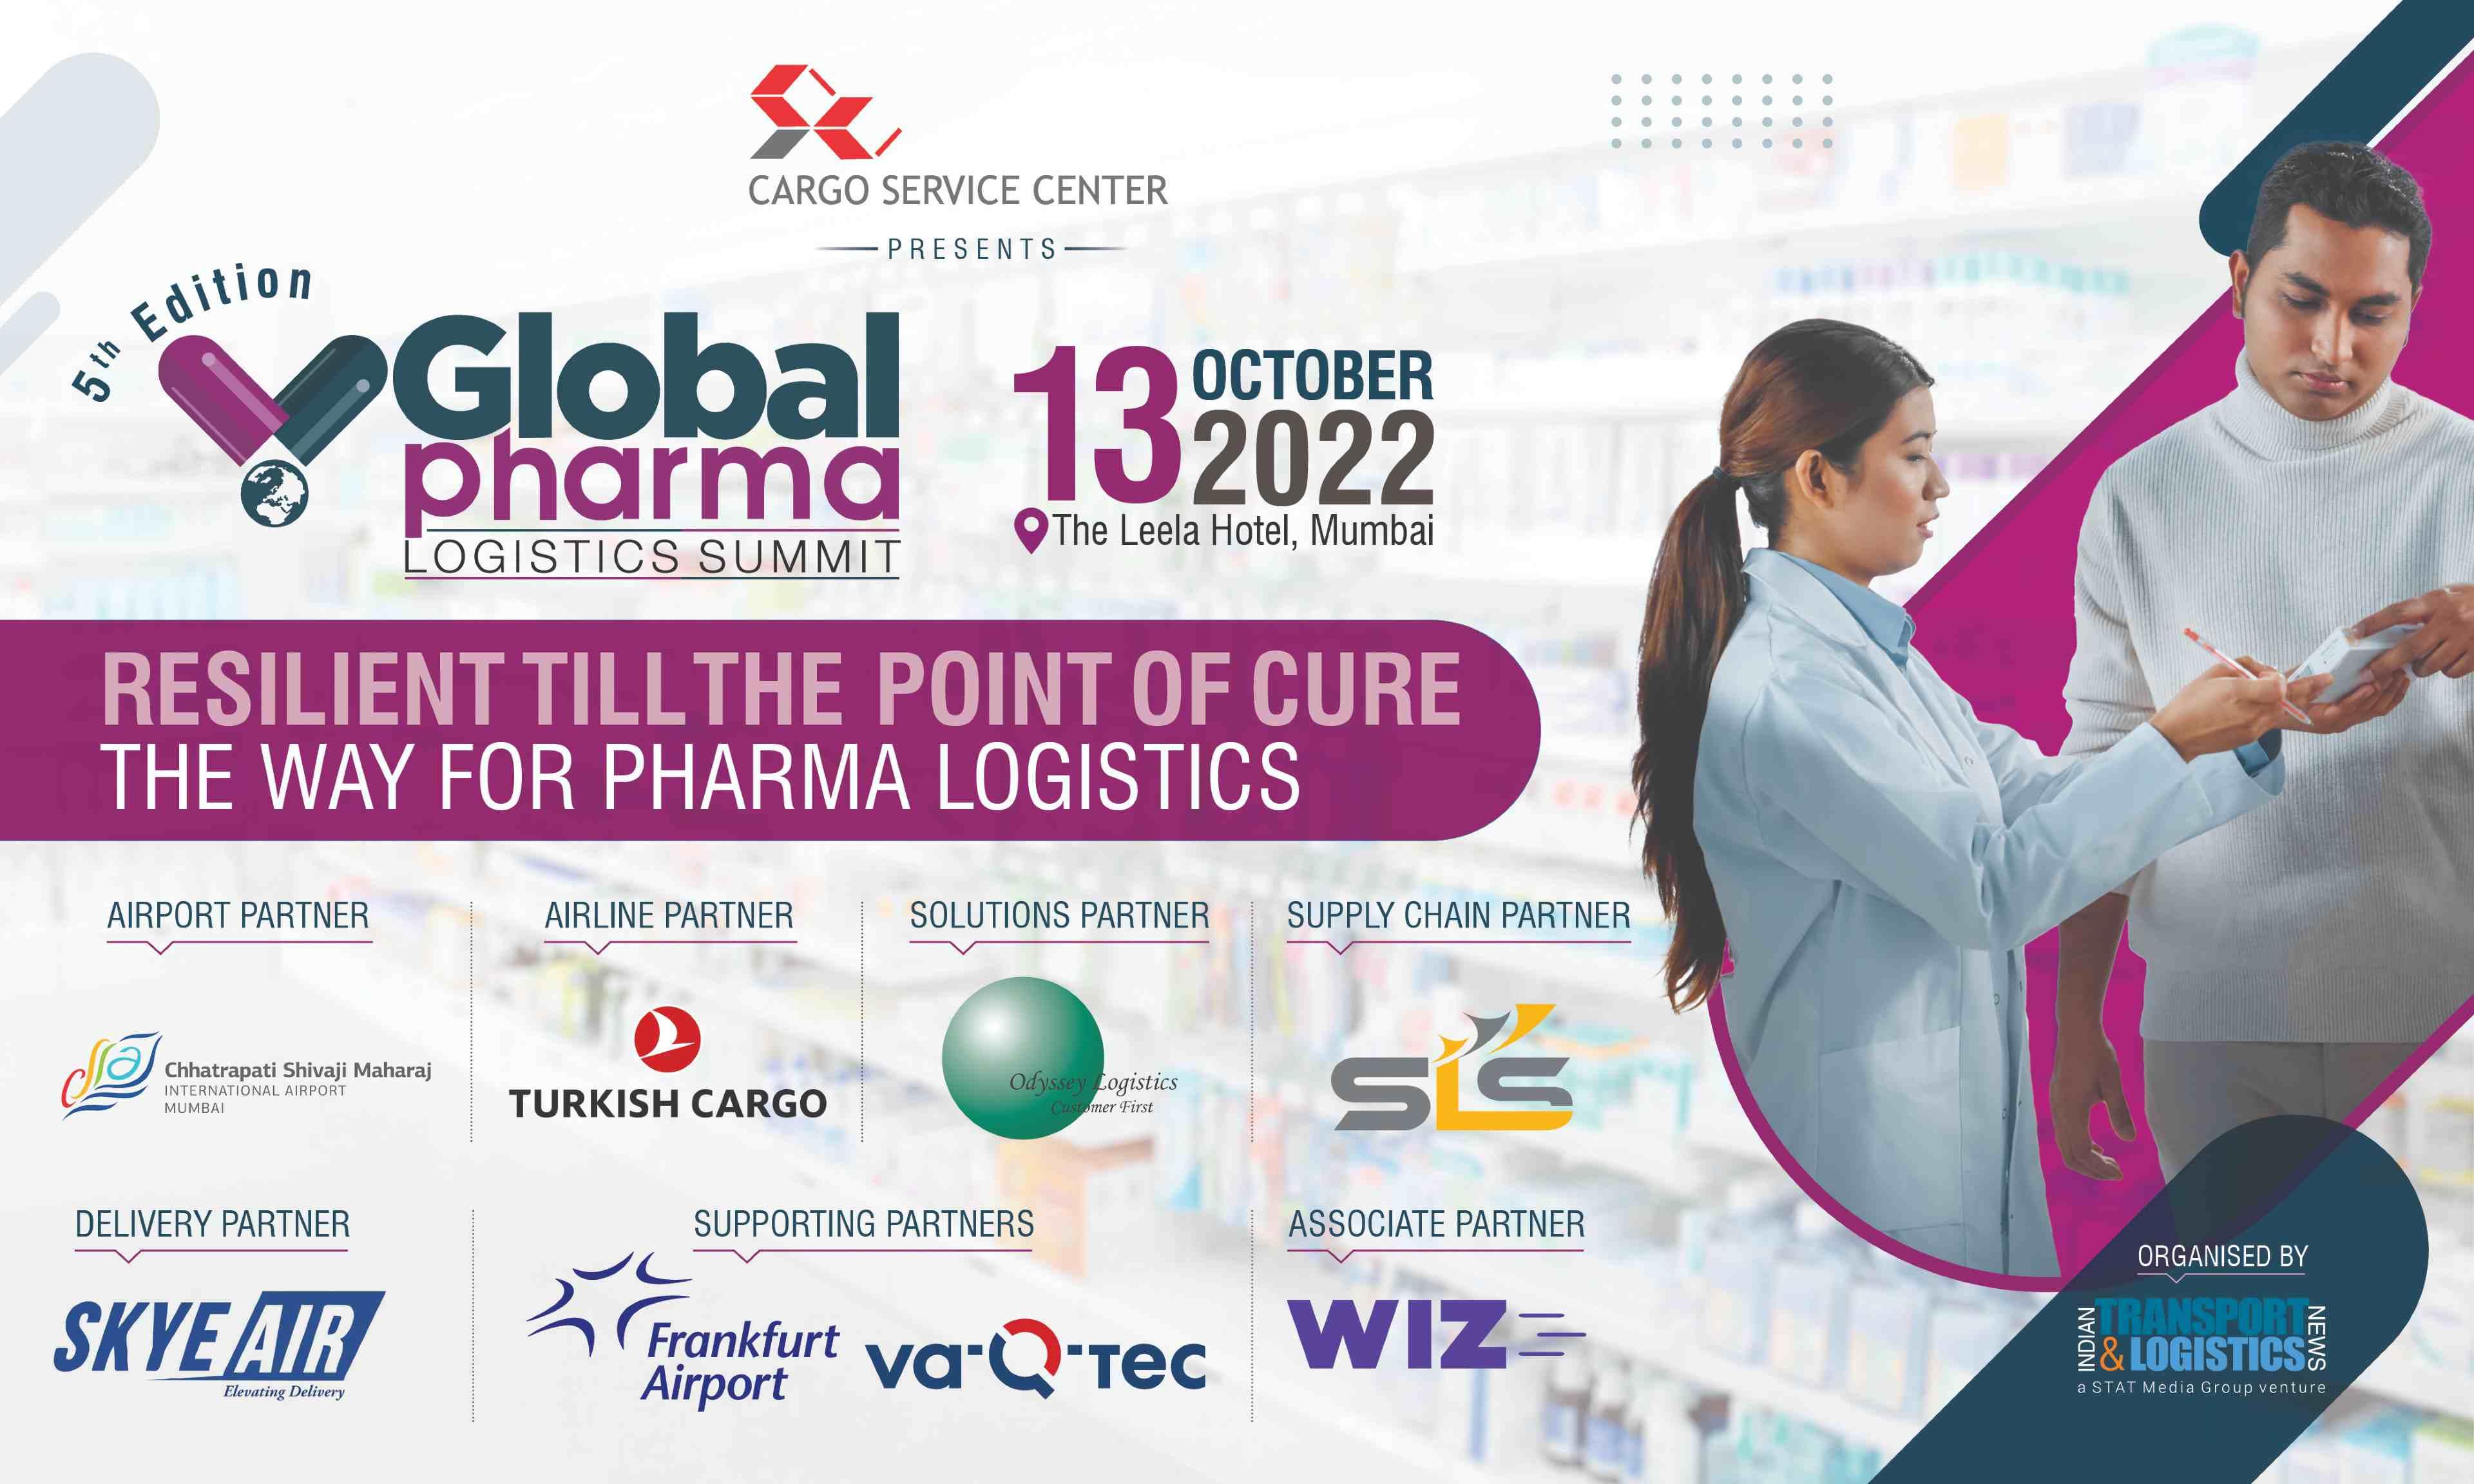 See you tomorrow in Mumbai for 5th edition of Global Pharma Logistics